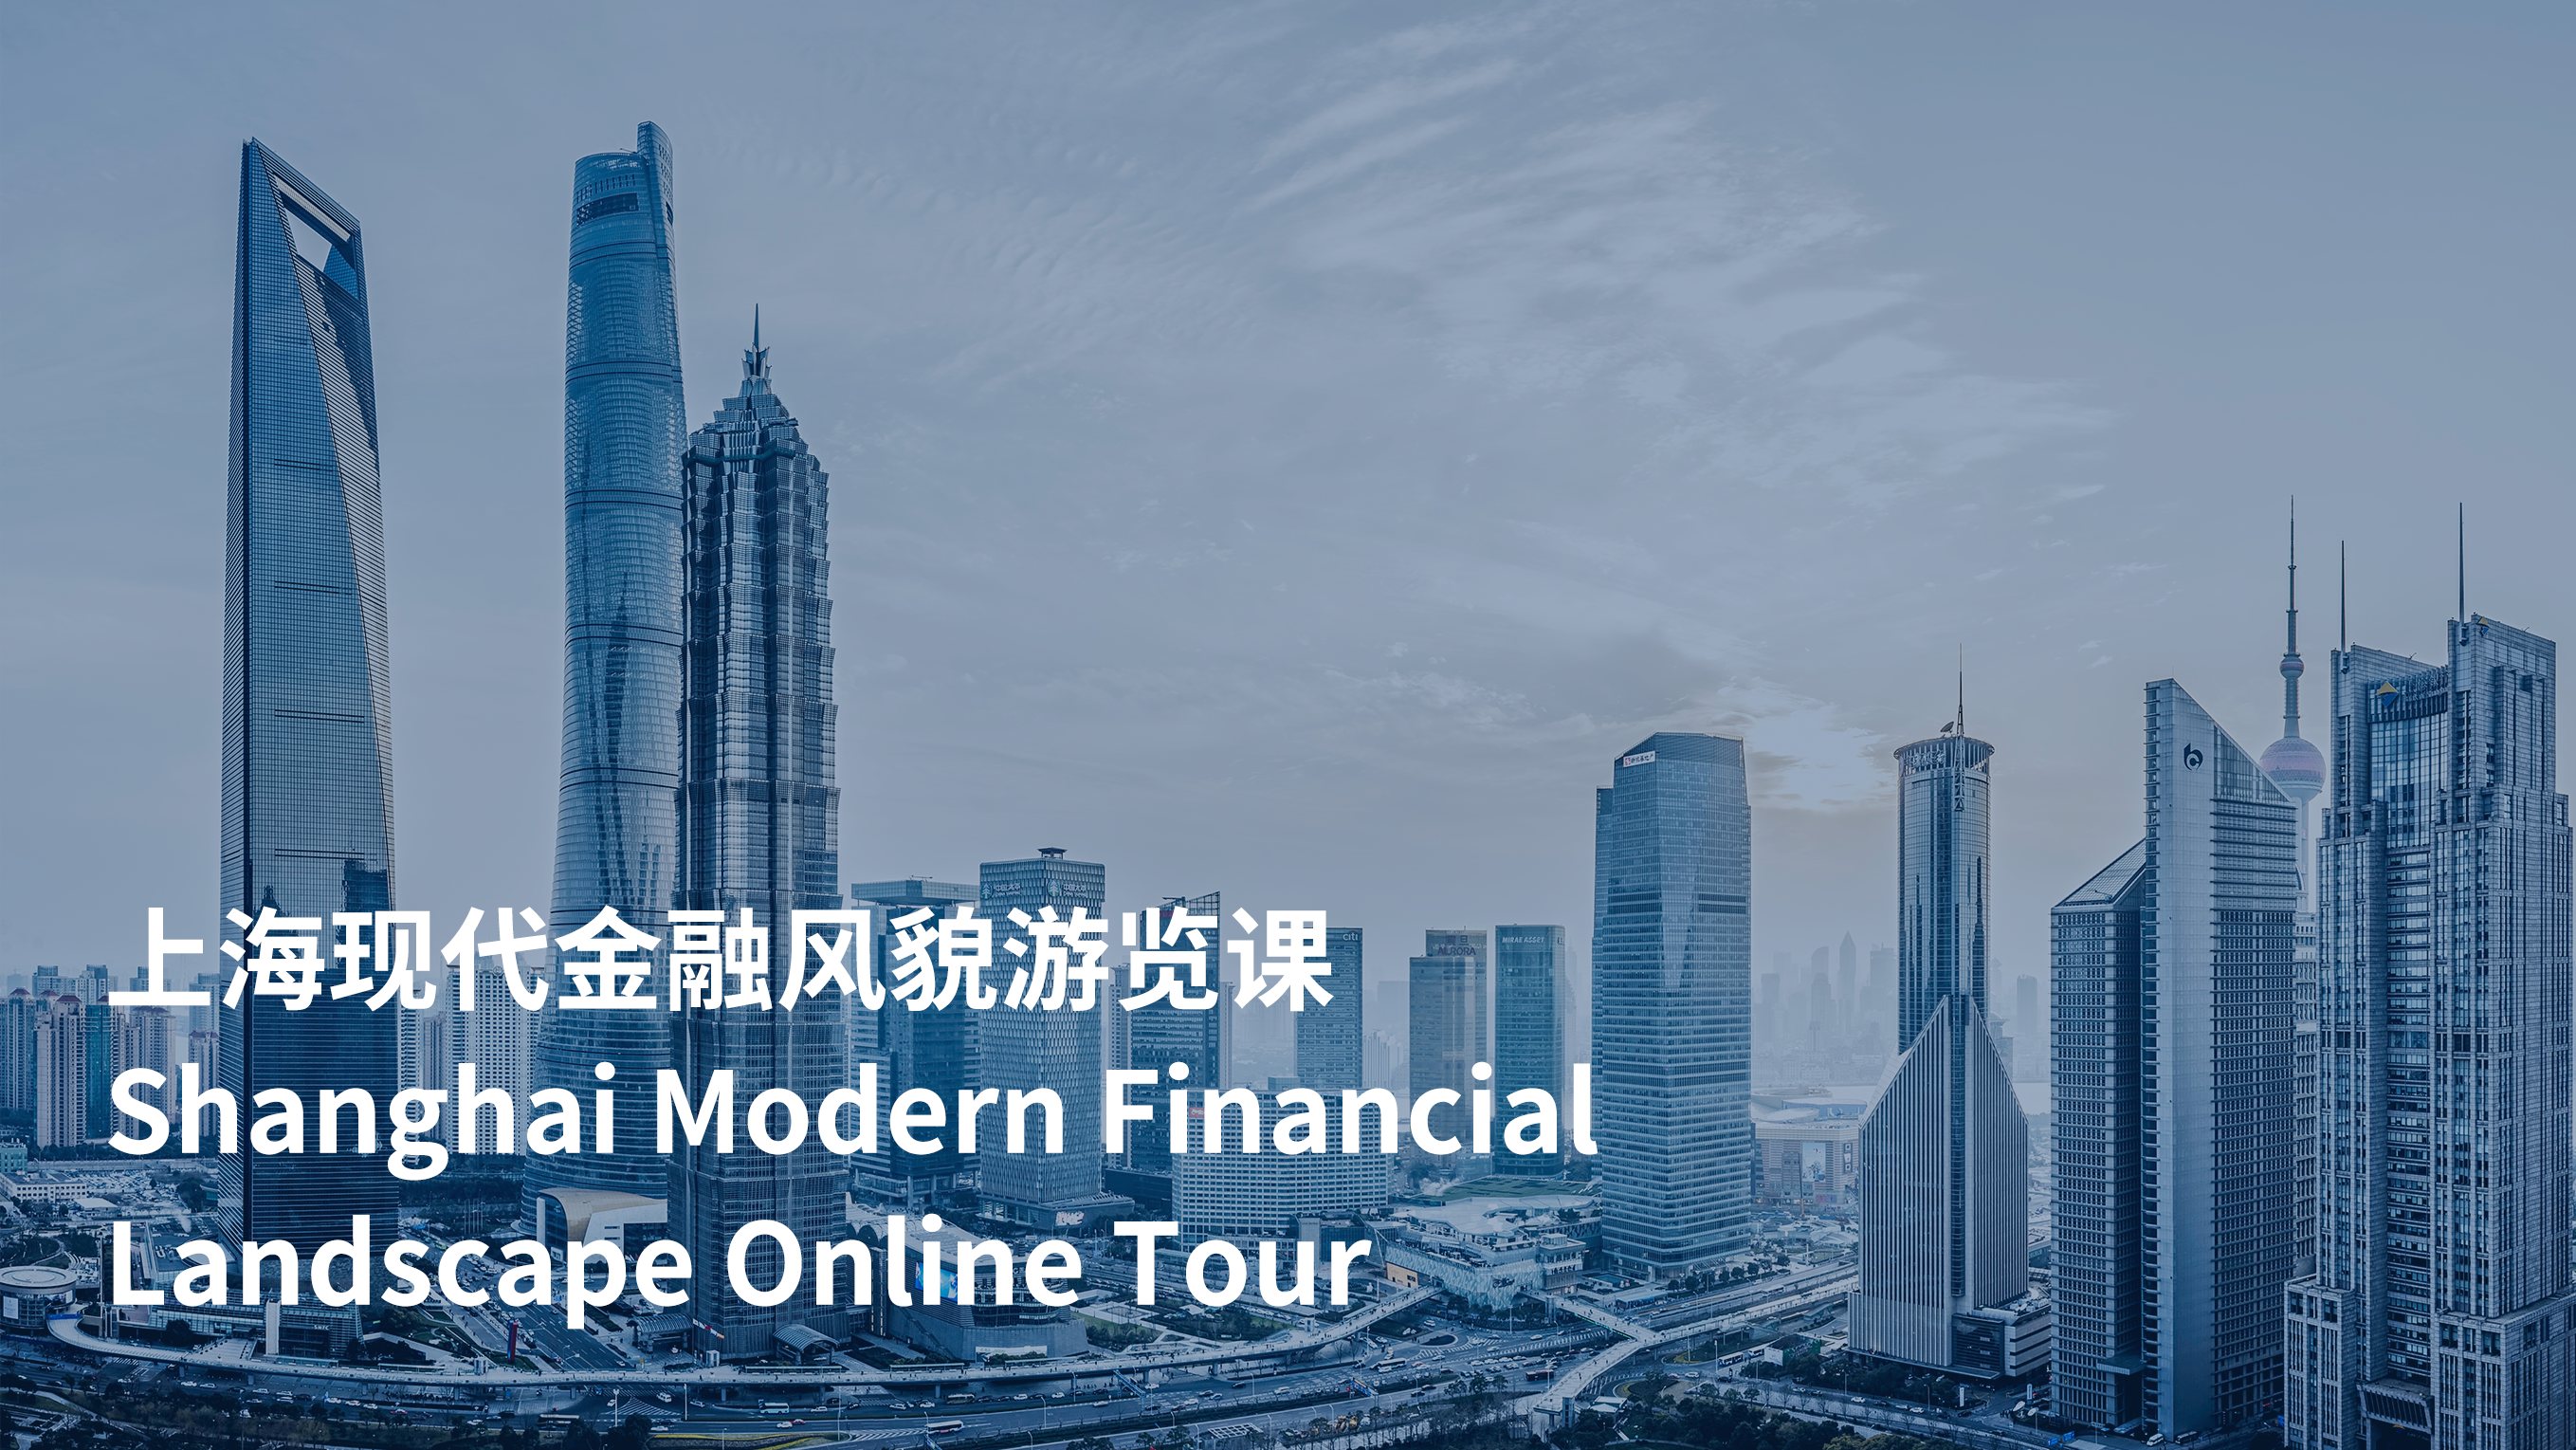 Shanghai Modern Financial Landscape Tour